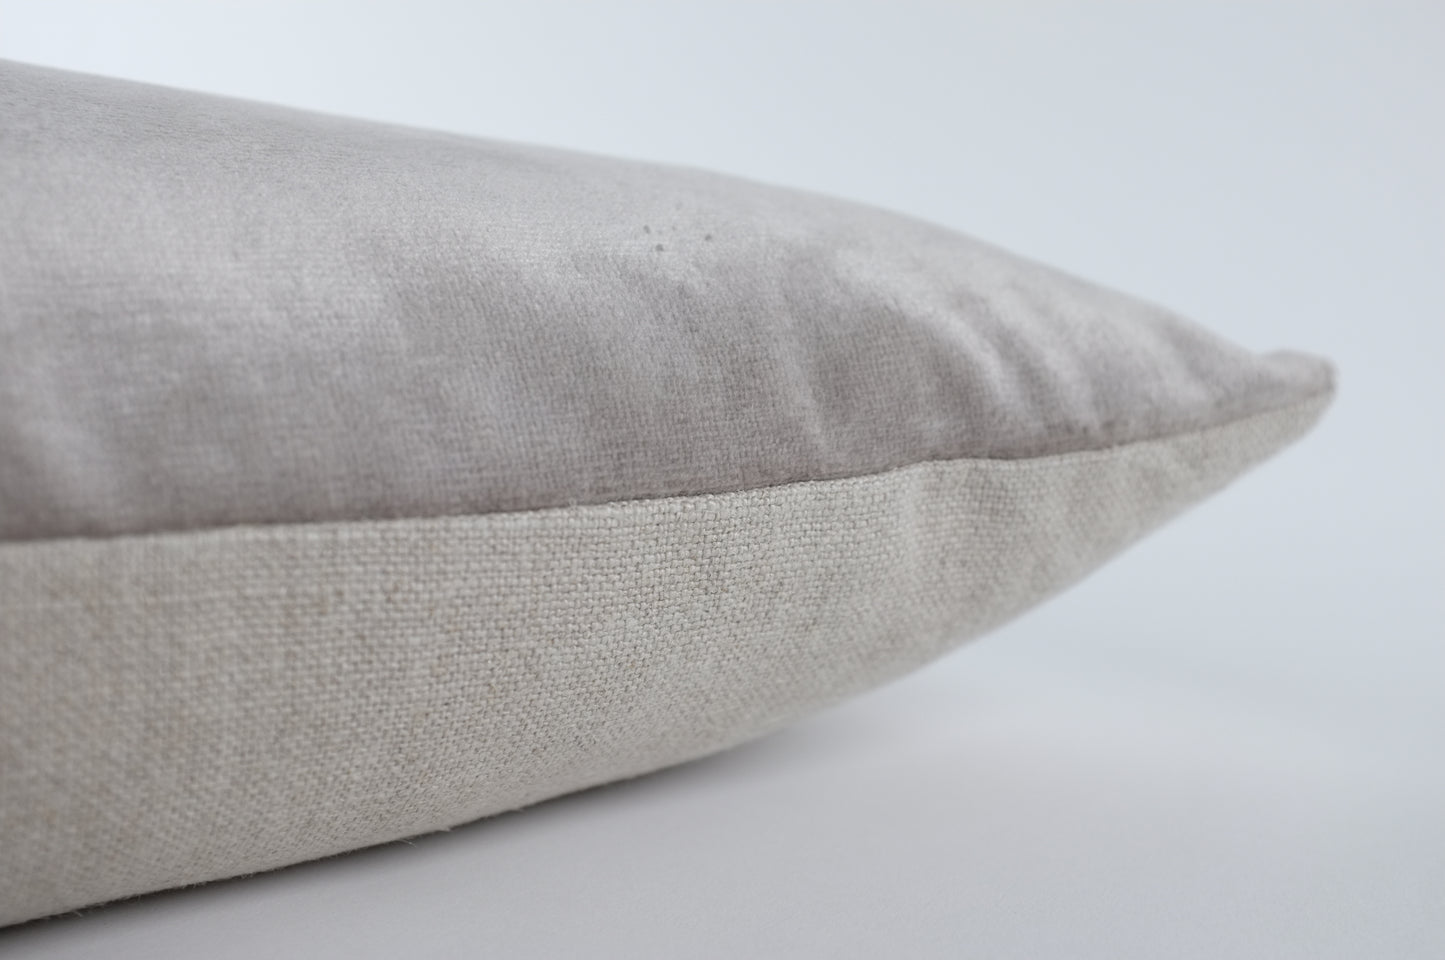 Grey Velvet Lumbar Pillow